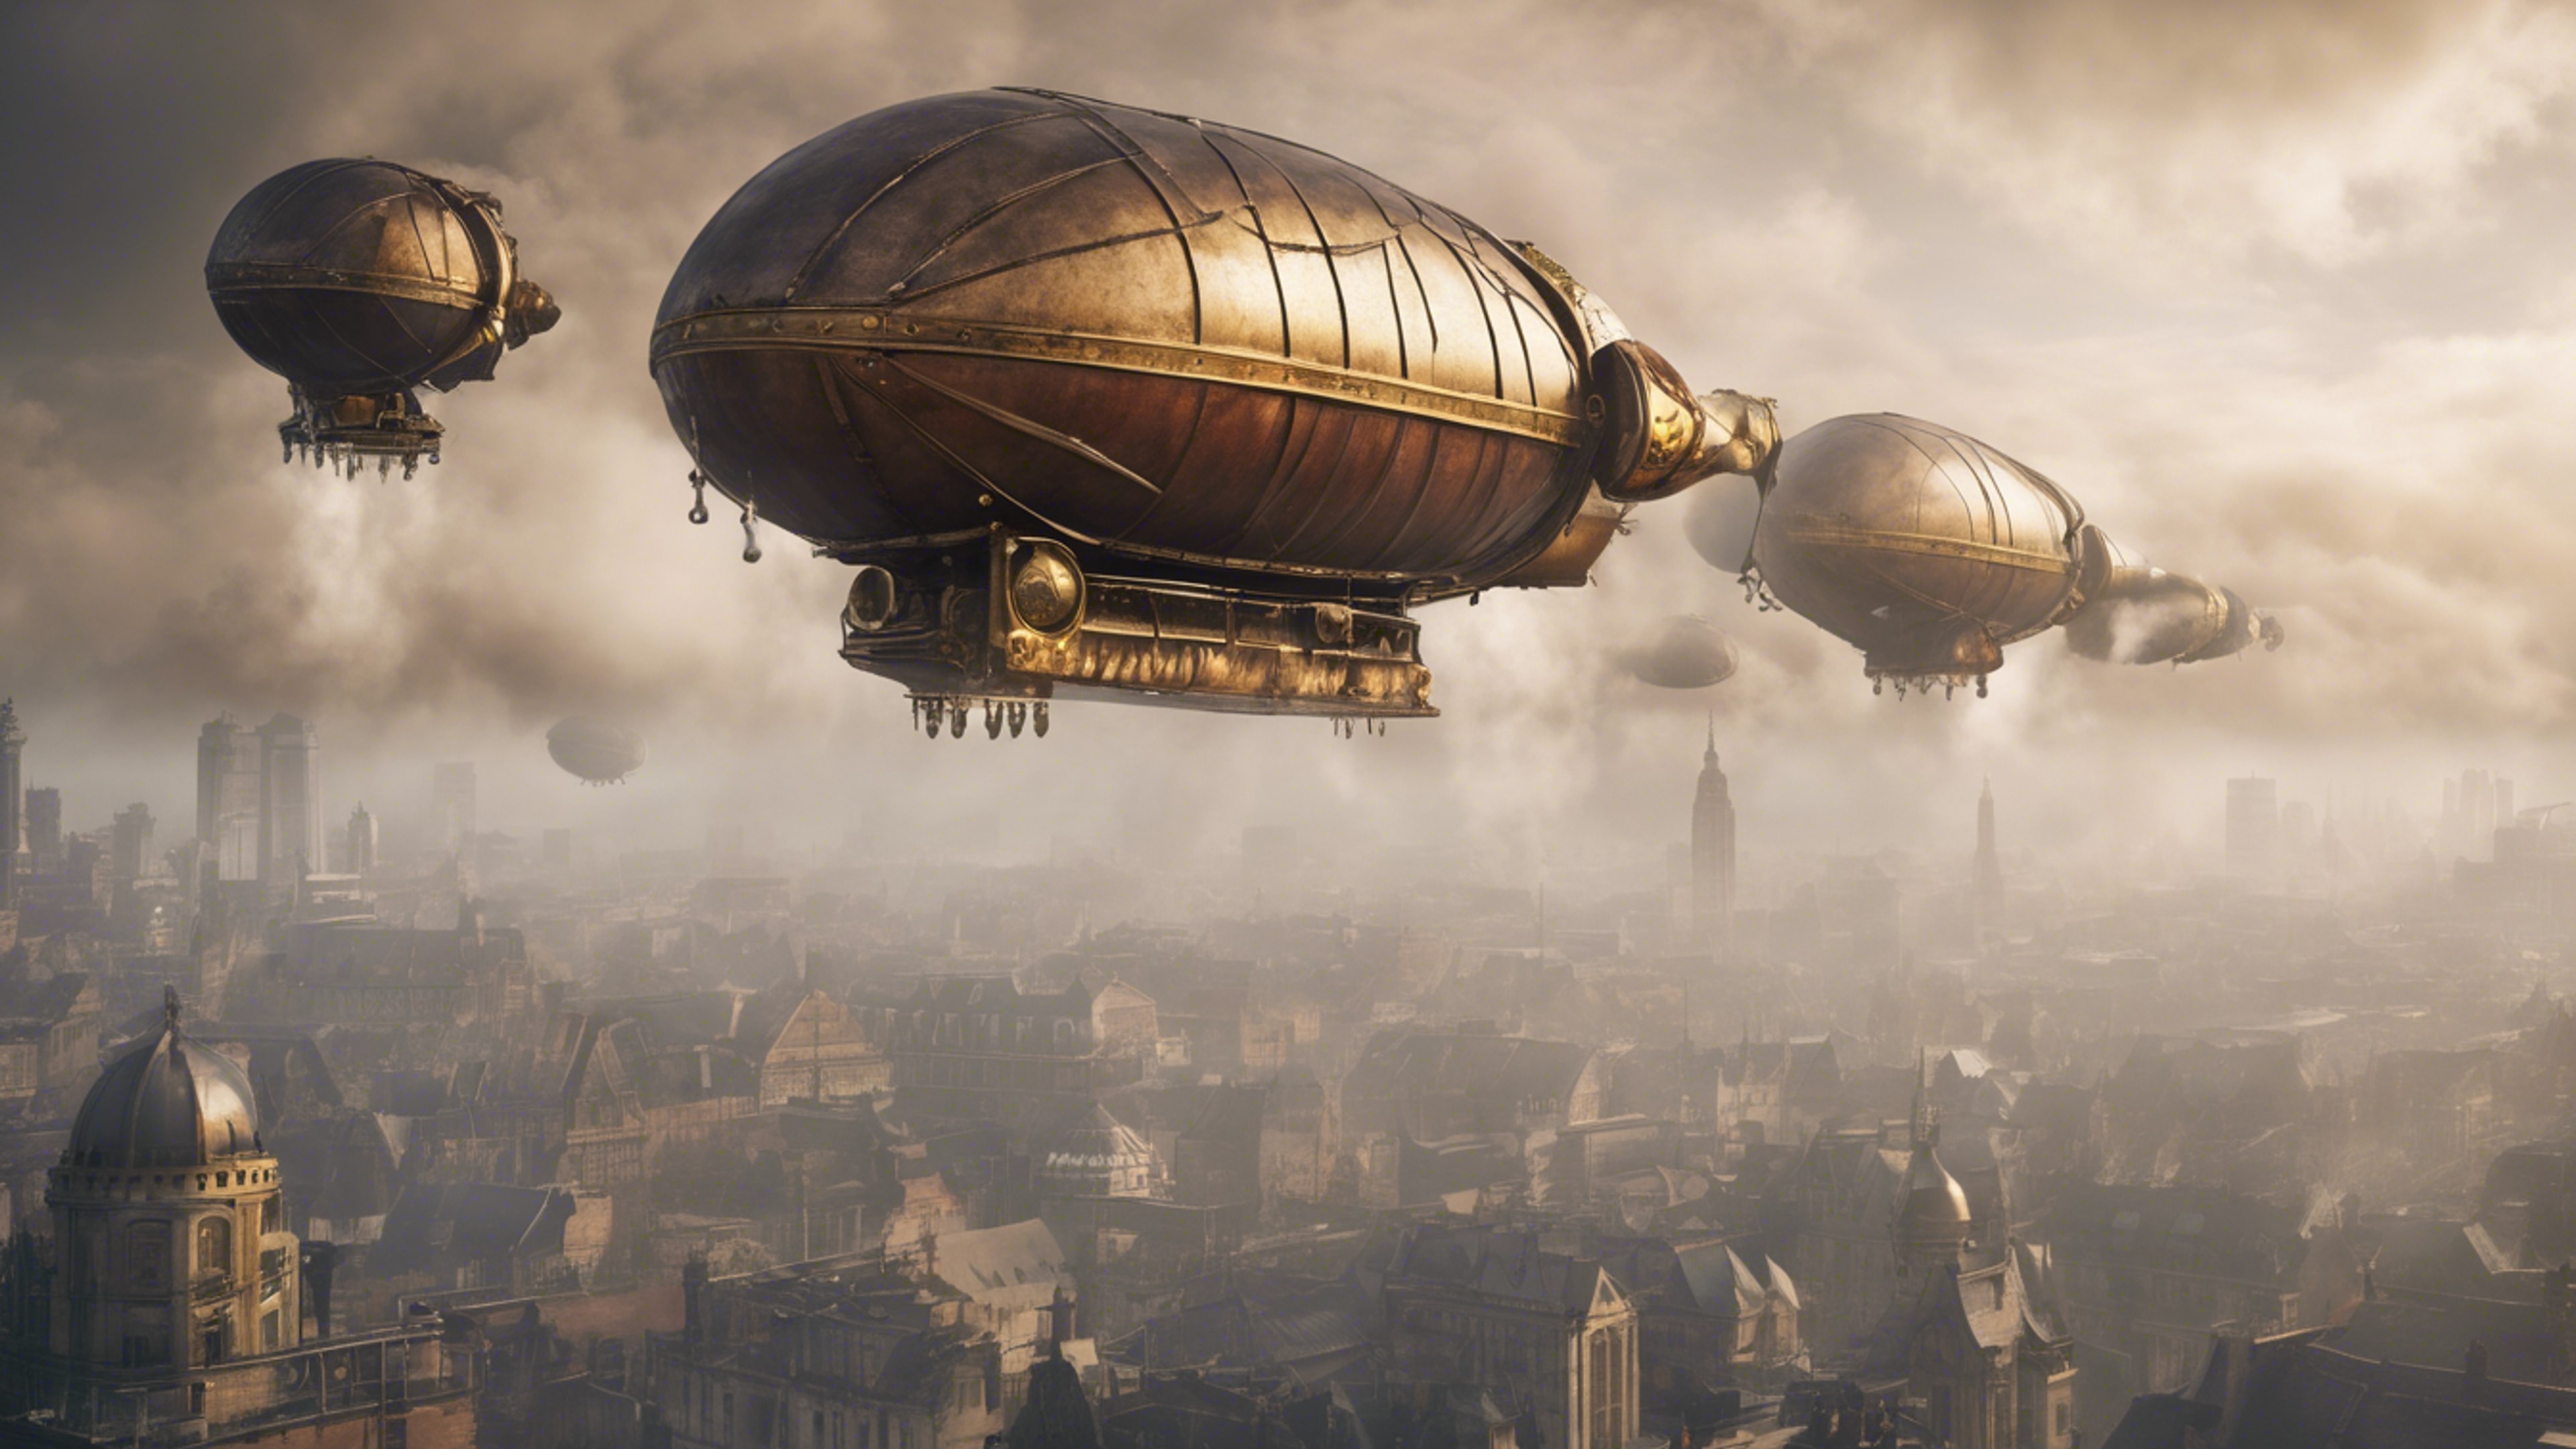 Steampunk zeppelins quietly floating across a misty city skyline in a dream. Wallpaper[c56513acdaa44c3db145]